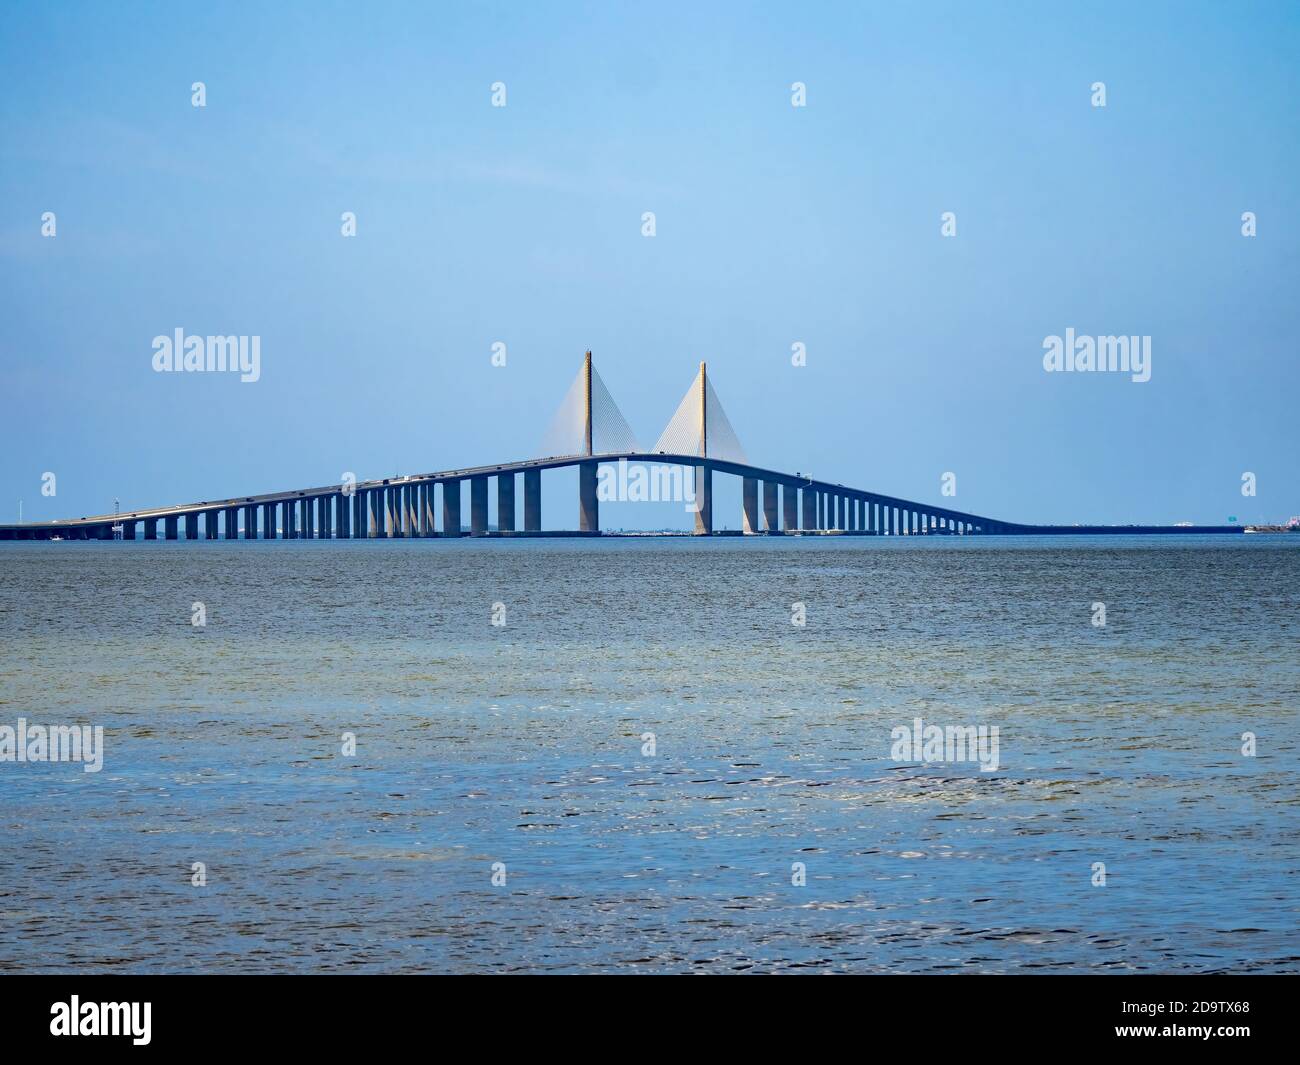 Il Bob Graham Sunshine Skyway Bridge attraversa la Lower Tampa Bay che collega San Pietroburgo, Florida, a Terra CEIA Florida negli Stati Uniti Foto Stock